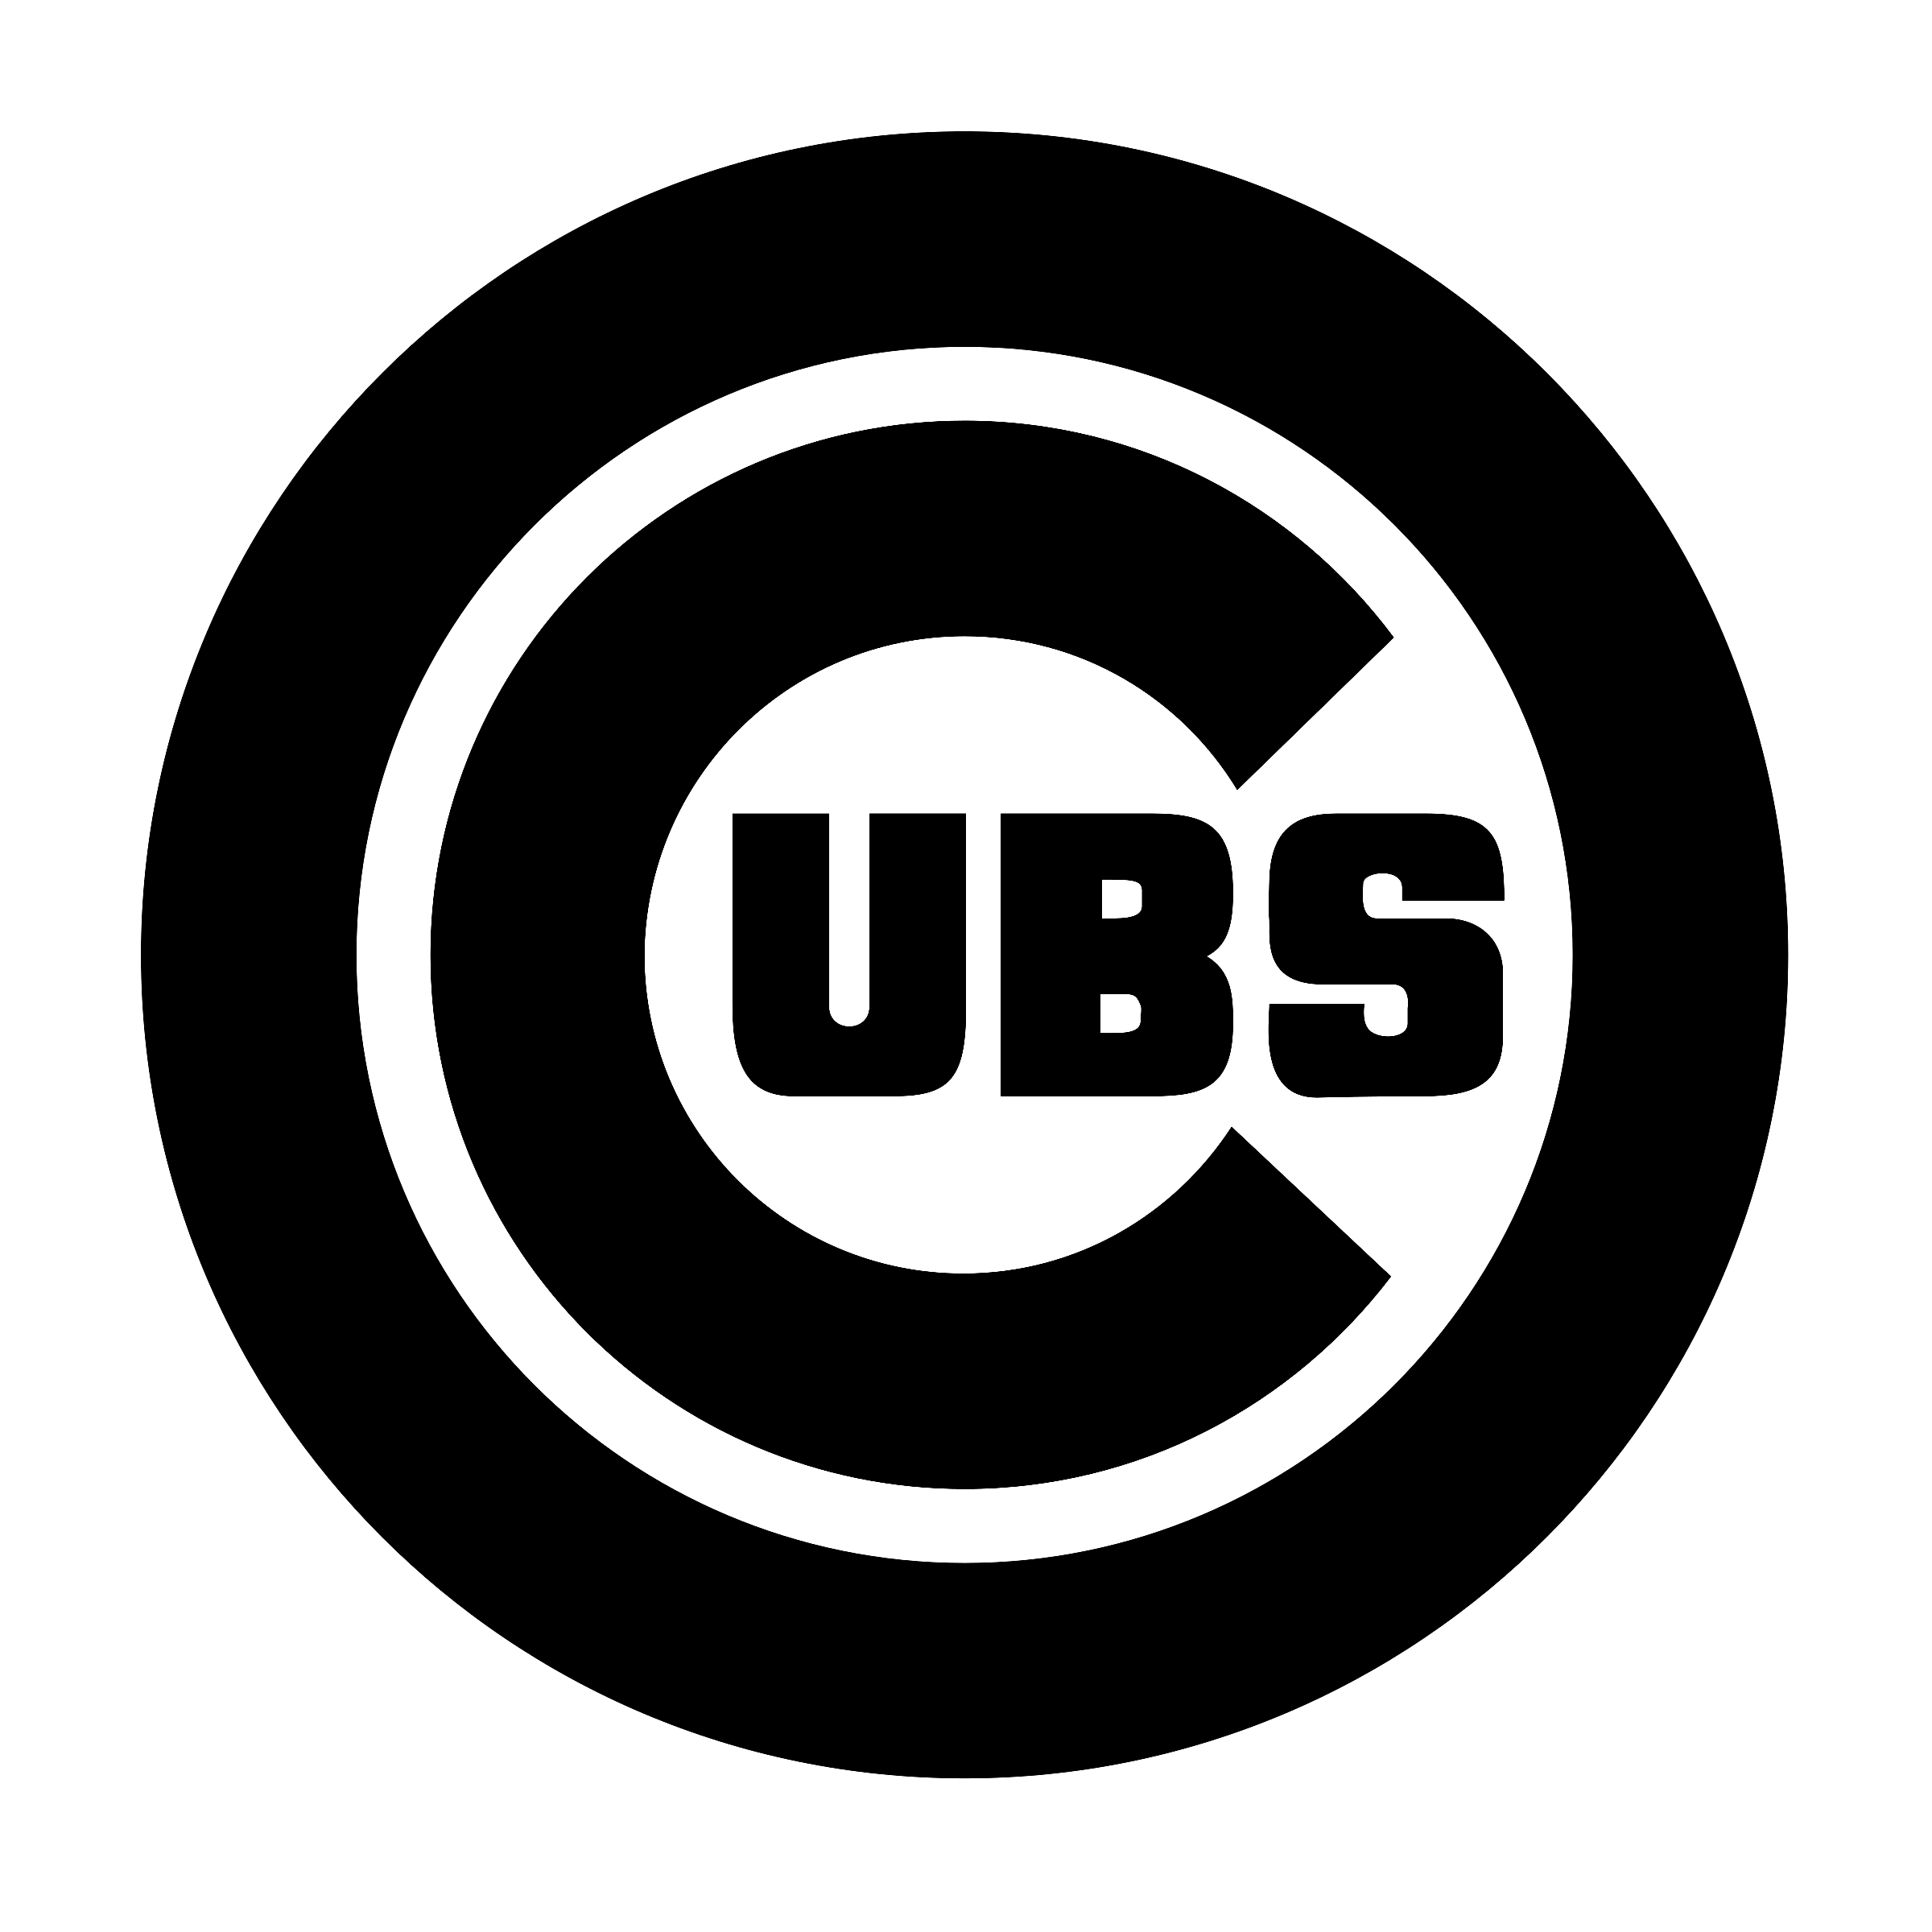 Chicago Cubs Logo PNG - 176463